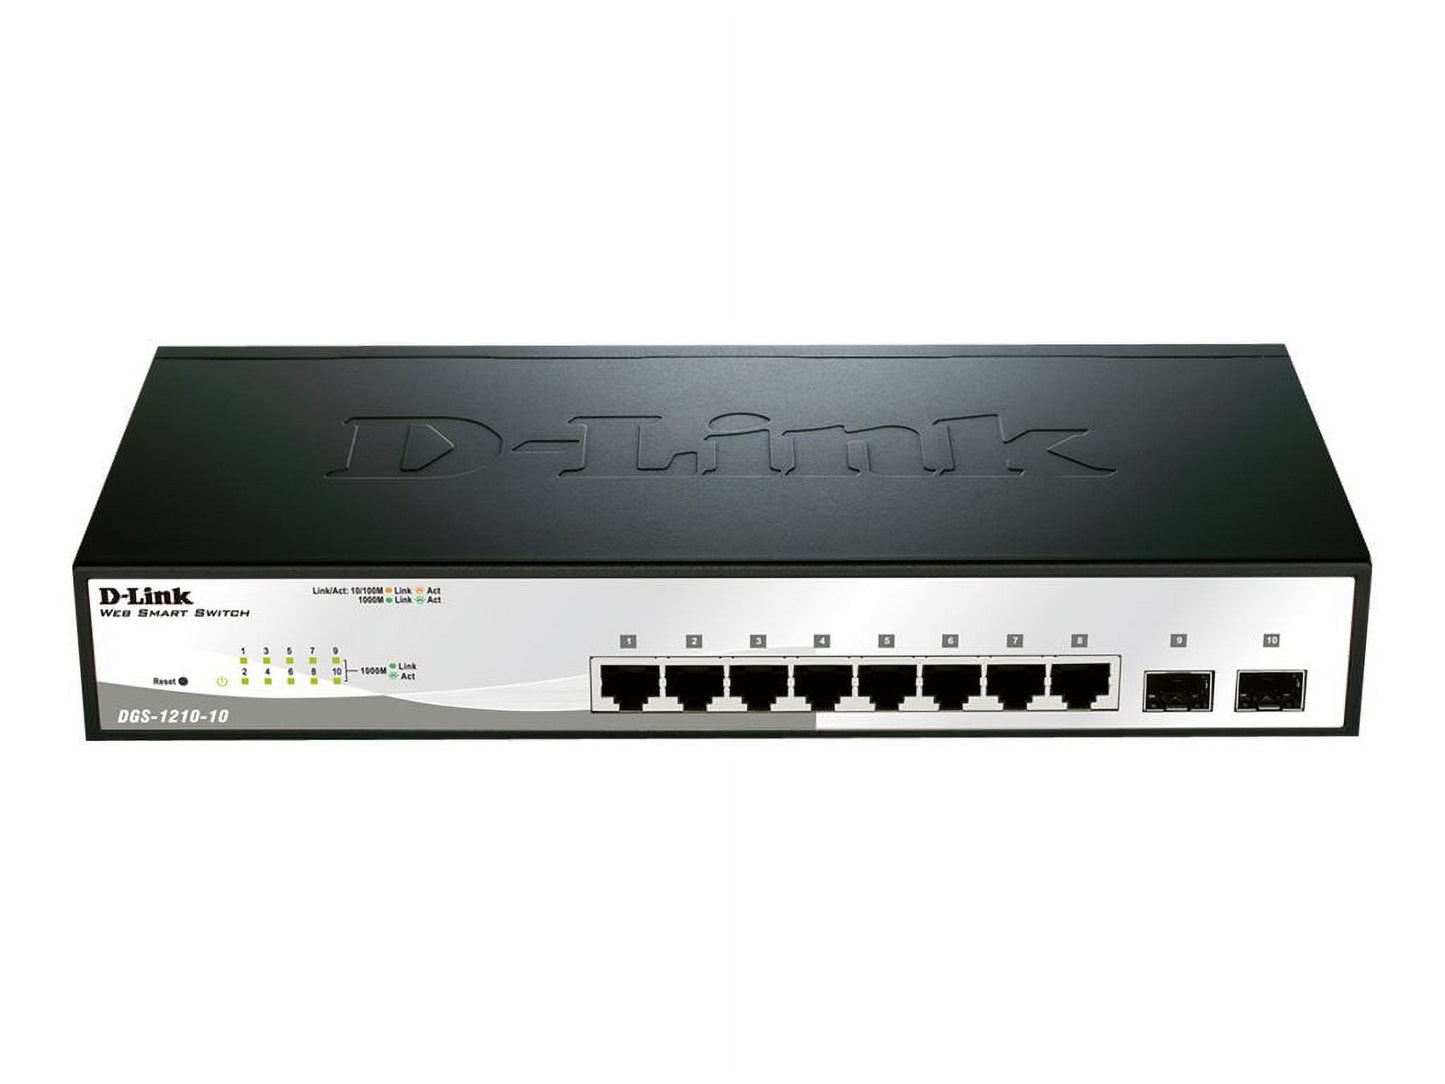 D-Link 10-Port Gigabit Web Smart Ethernet Switch - DGS-1210-10 New